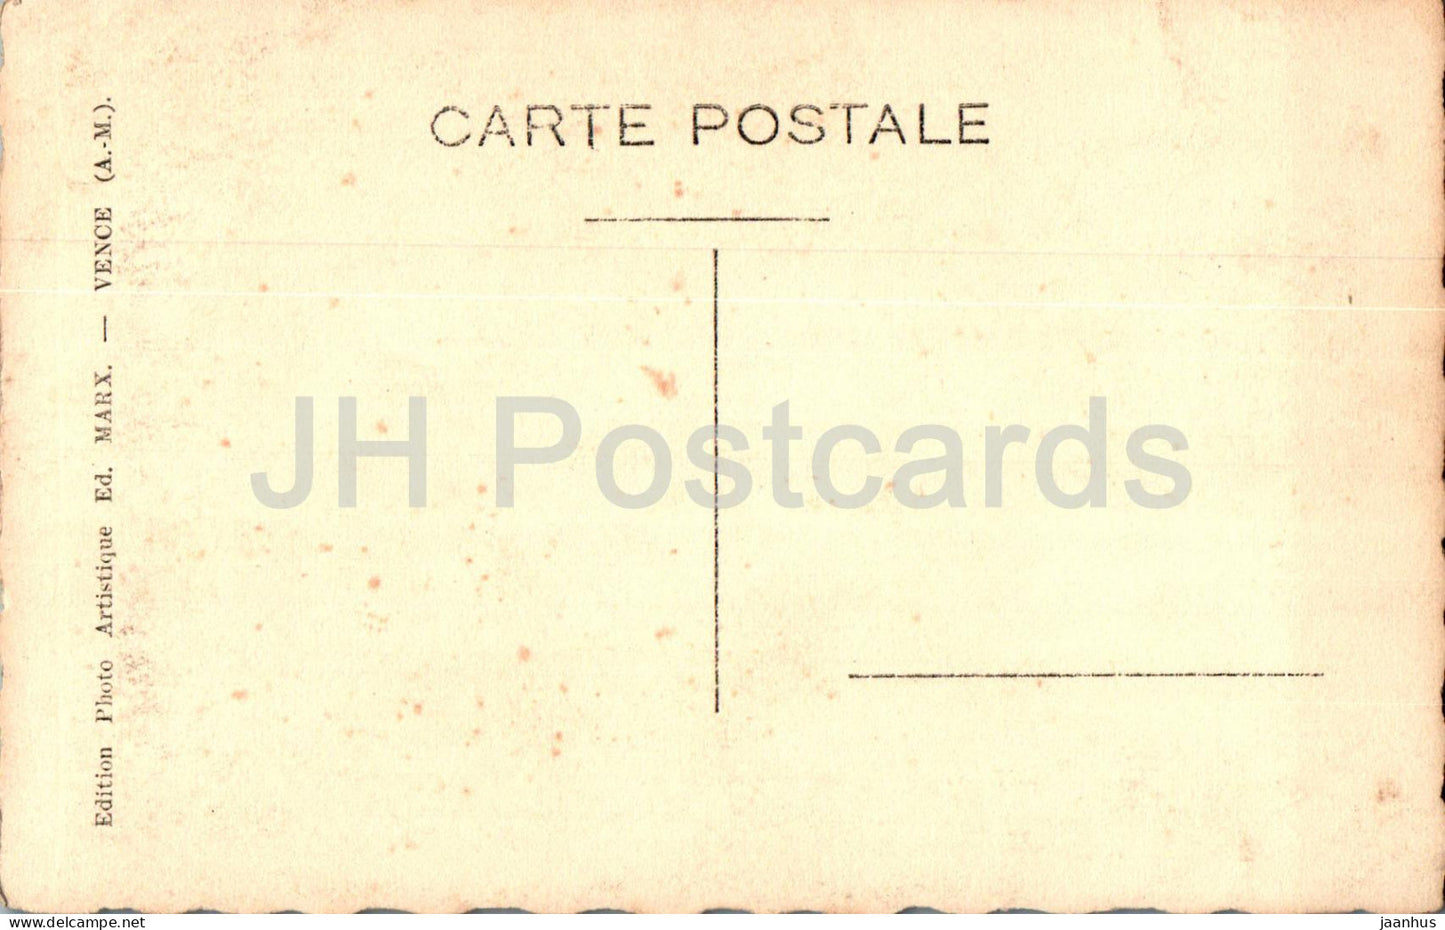 Vence - Straßen - 1 - Ed Marx - alte Postkarte - Frankreich - unbenutzt 